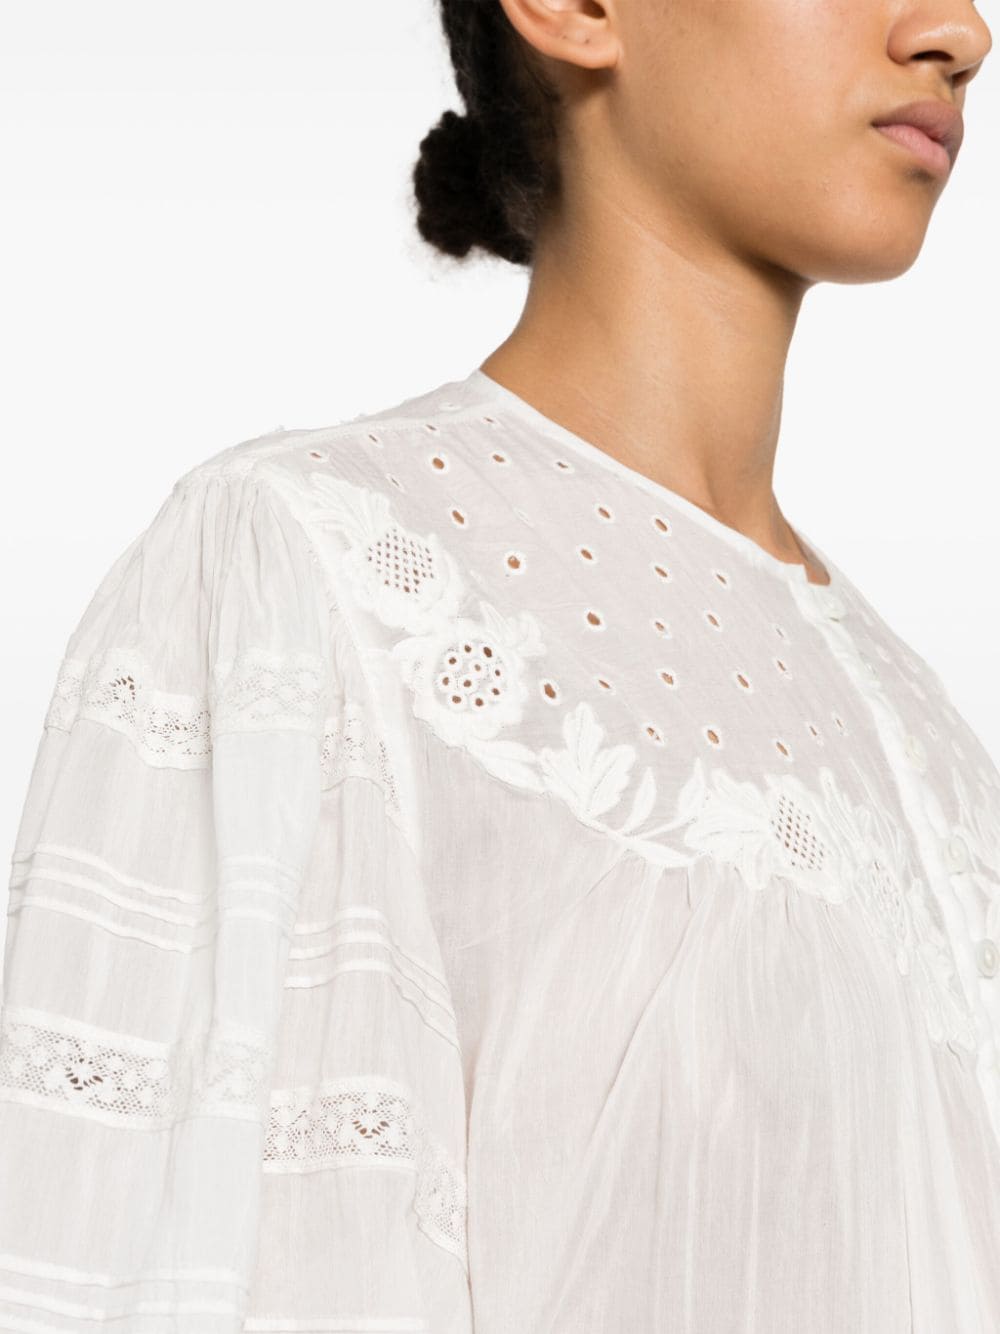 Gregoria cotton-silk blouse<BR/><BR/><BR/>